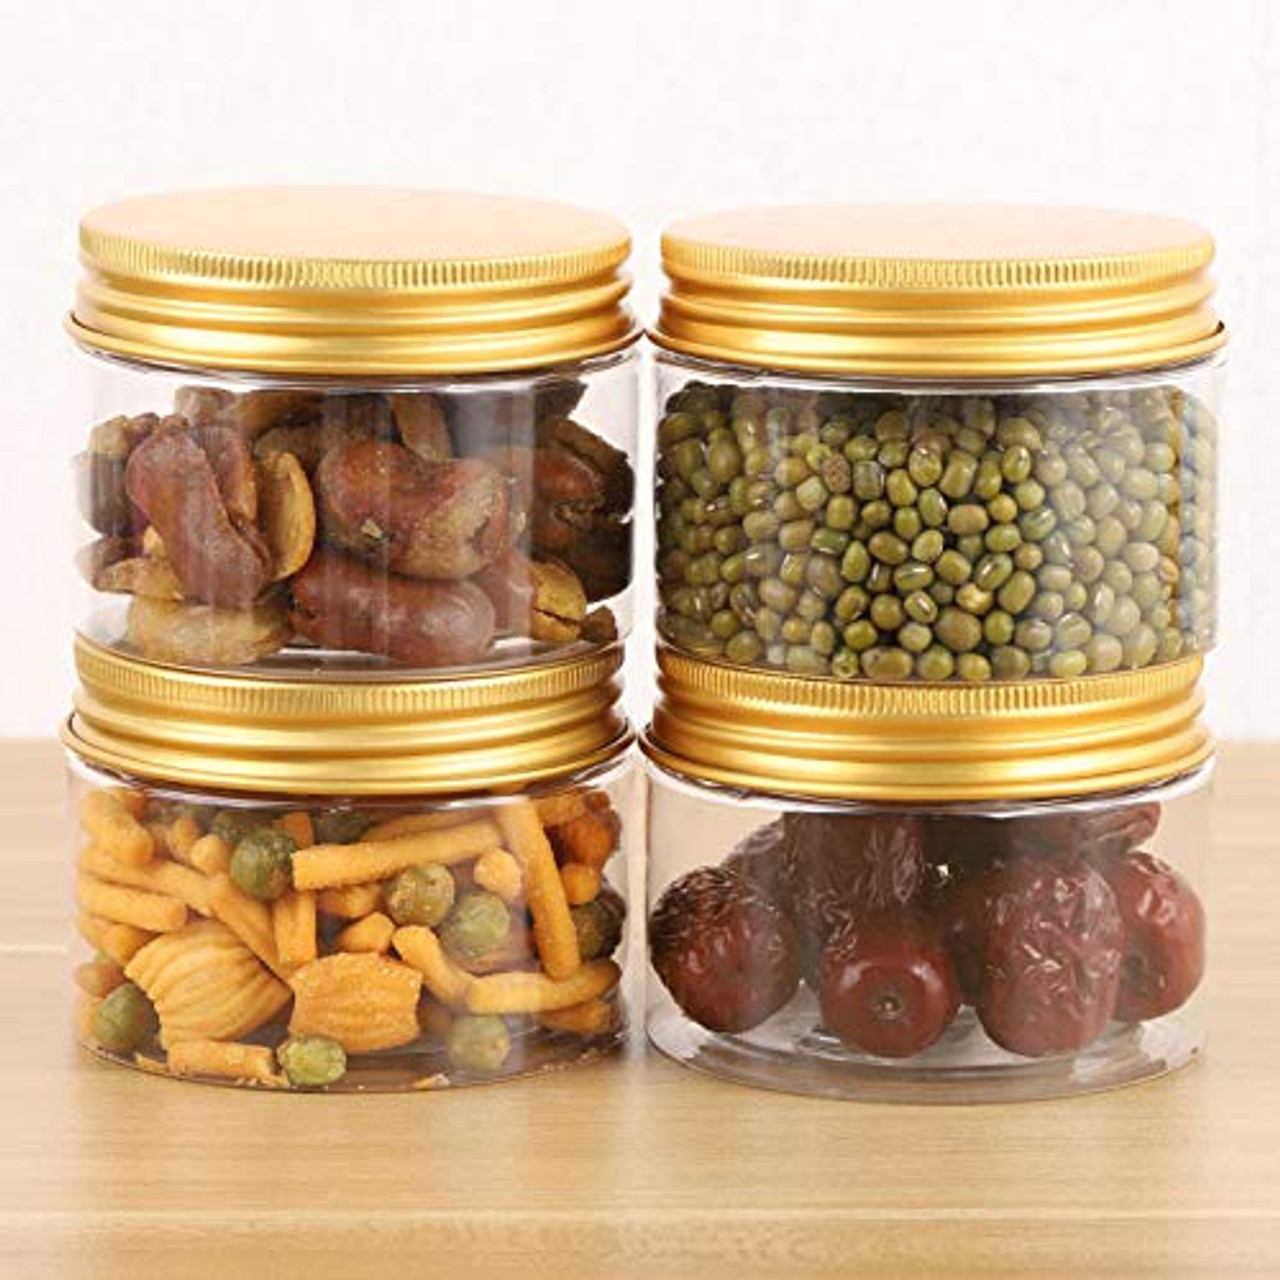 Small Round Storage Jars with Bright Lids - 12 Pc.